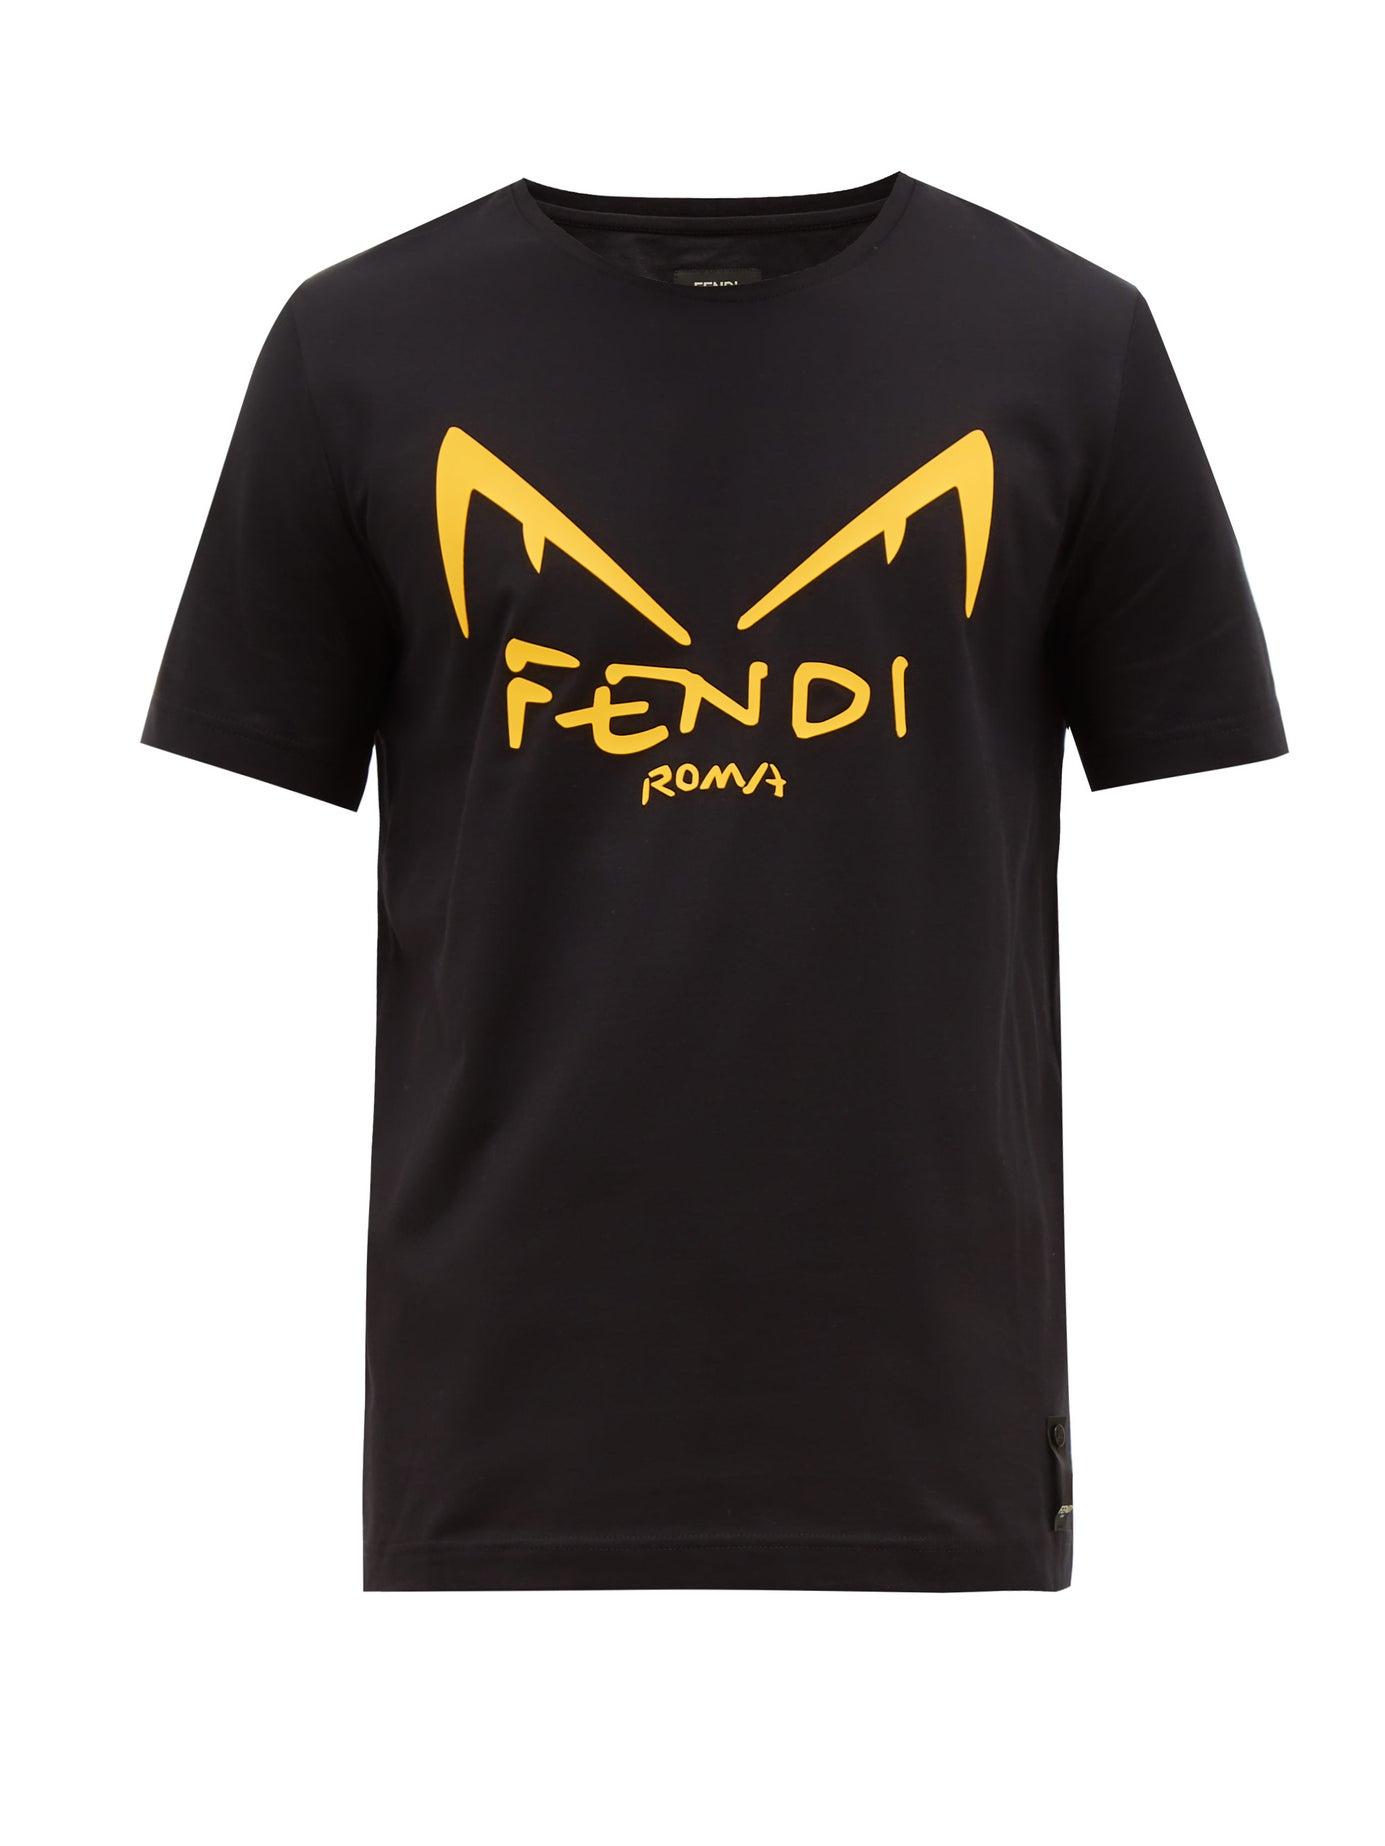 Fendi Eyes Logo Print Cotton T Shirt in Black/Yellow (Black) for Men - Lyst